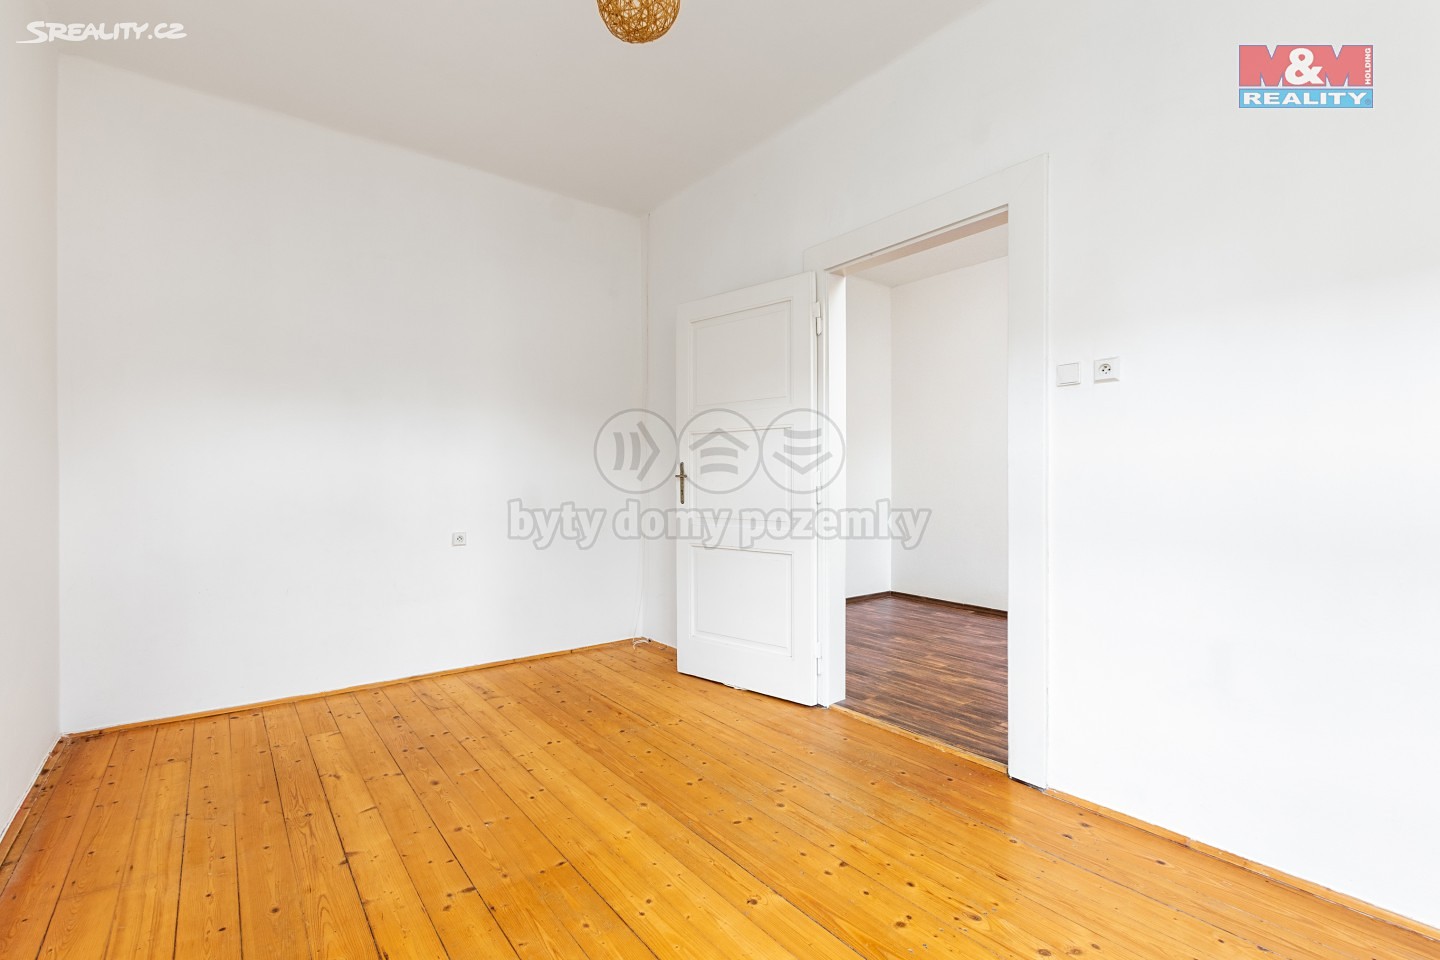 Prodej bytu 2+1 40 m², Víta Nejedlého, Chrudim - Chrudim III